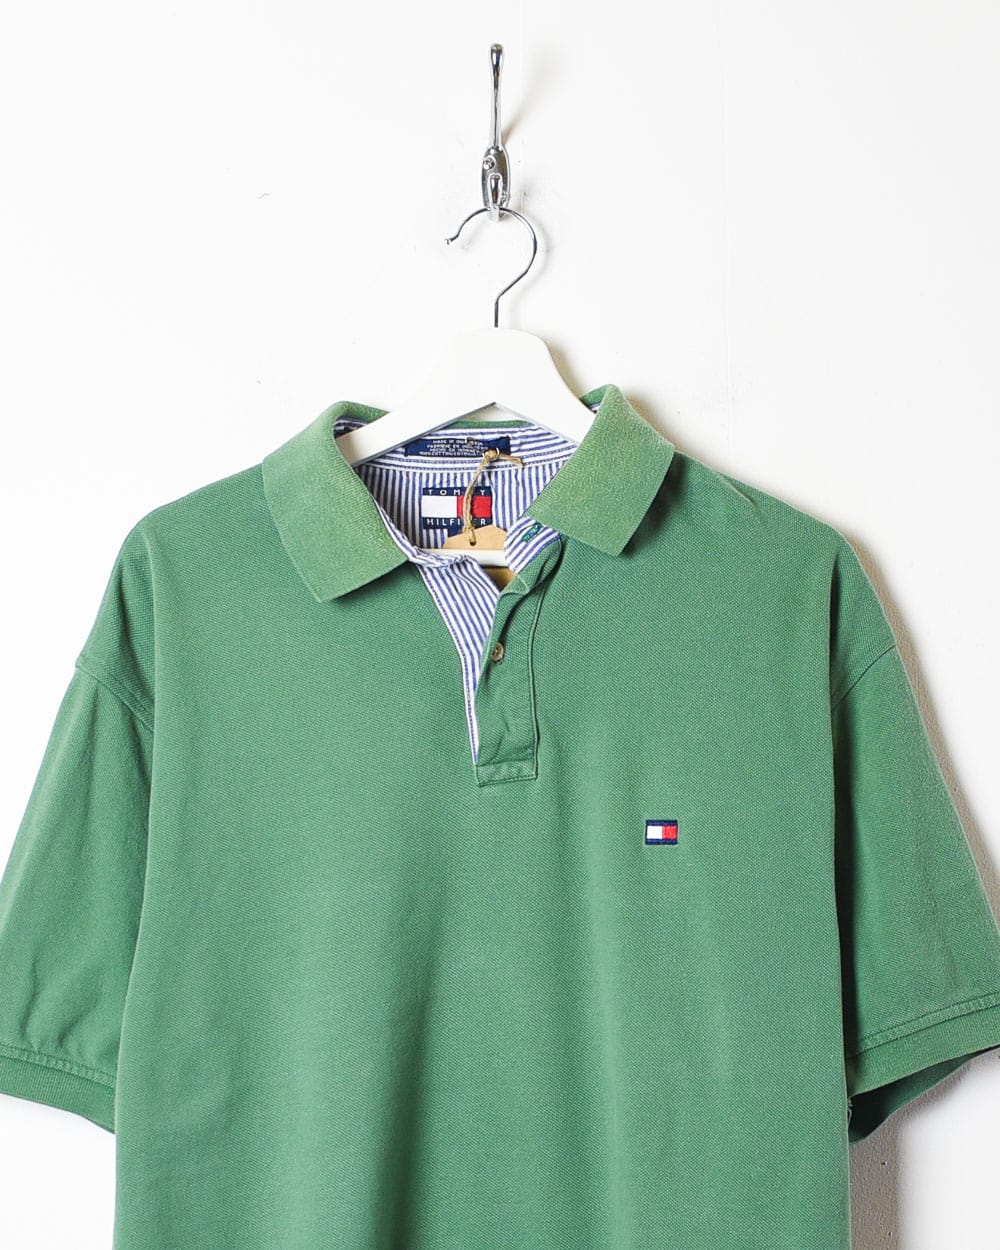 Green Tommy Hilfiger Polo Shirt - Medium